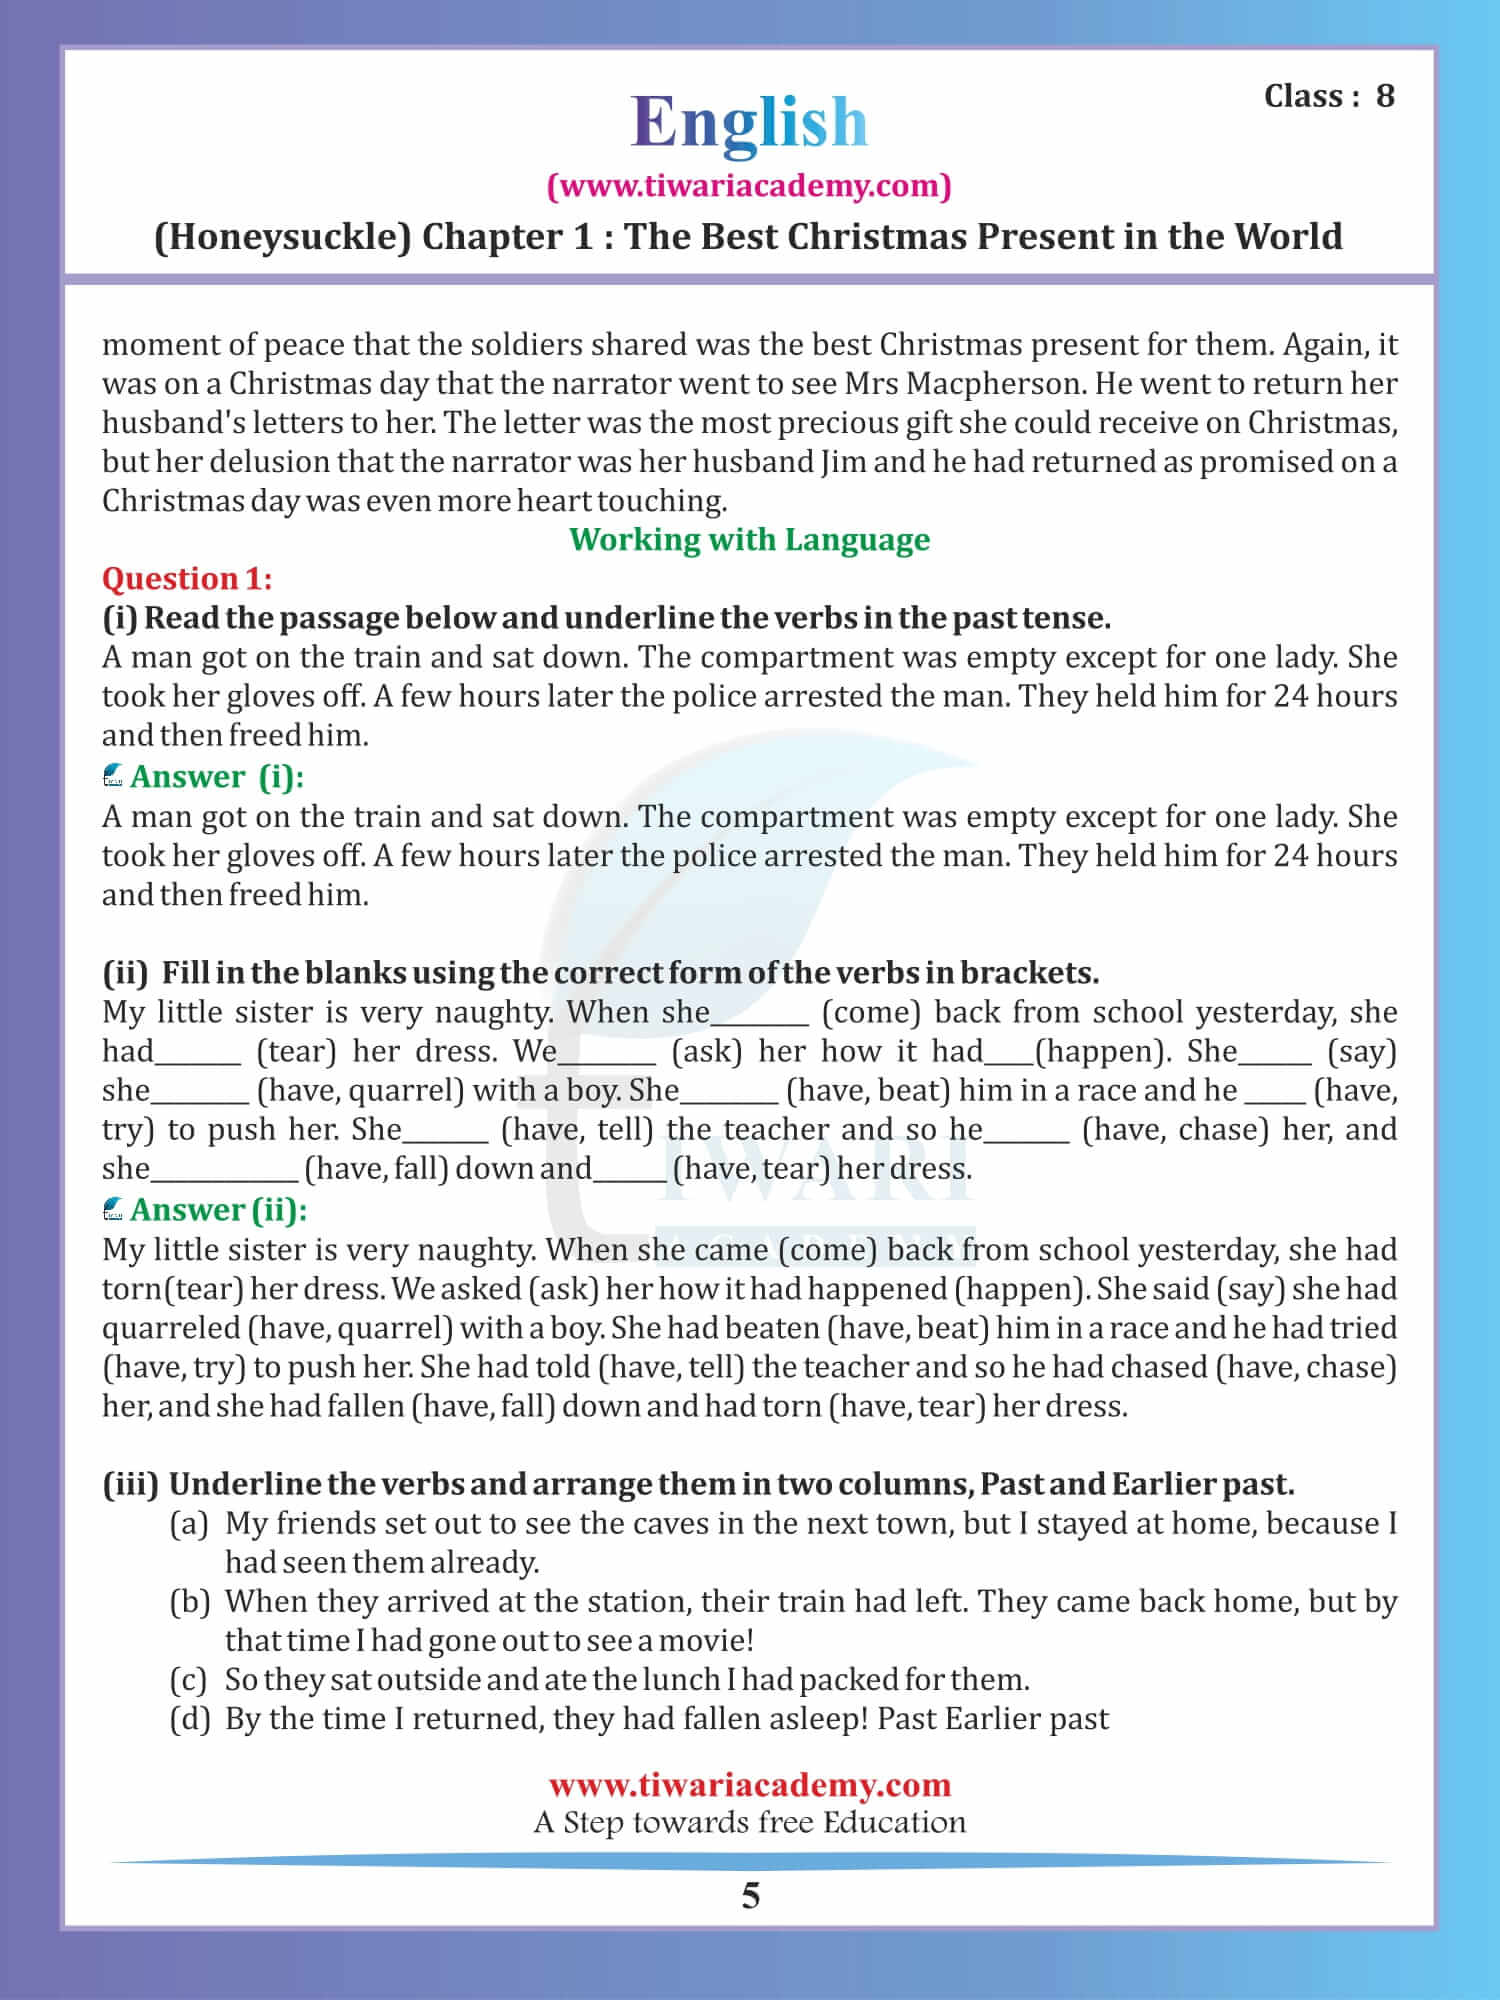 Class 8 English Honeydew Chapter 1 guide